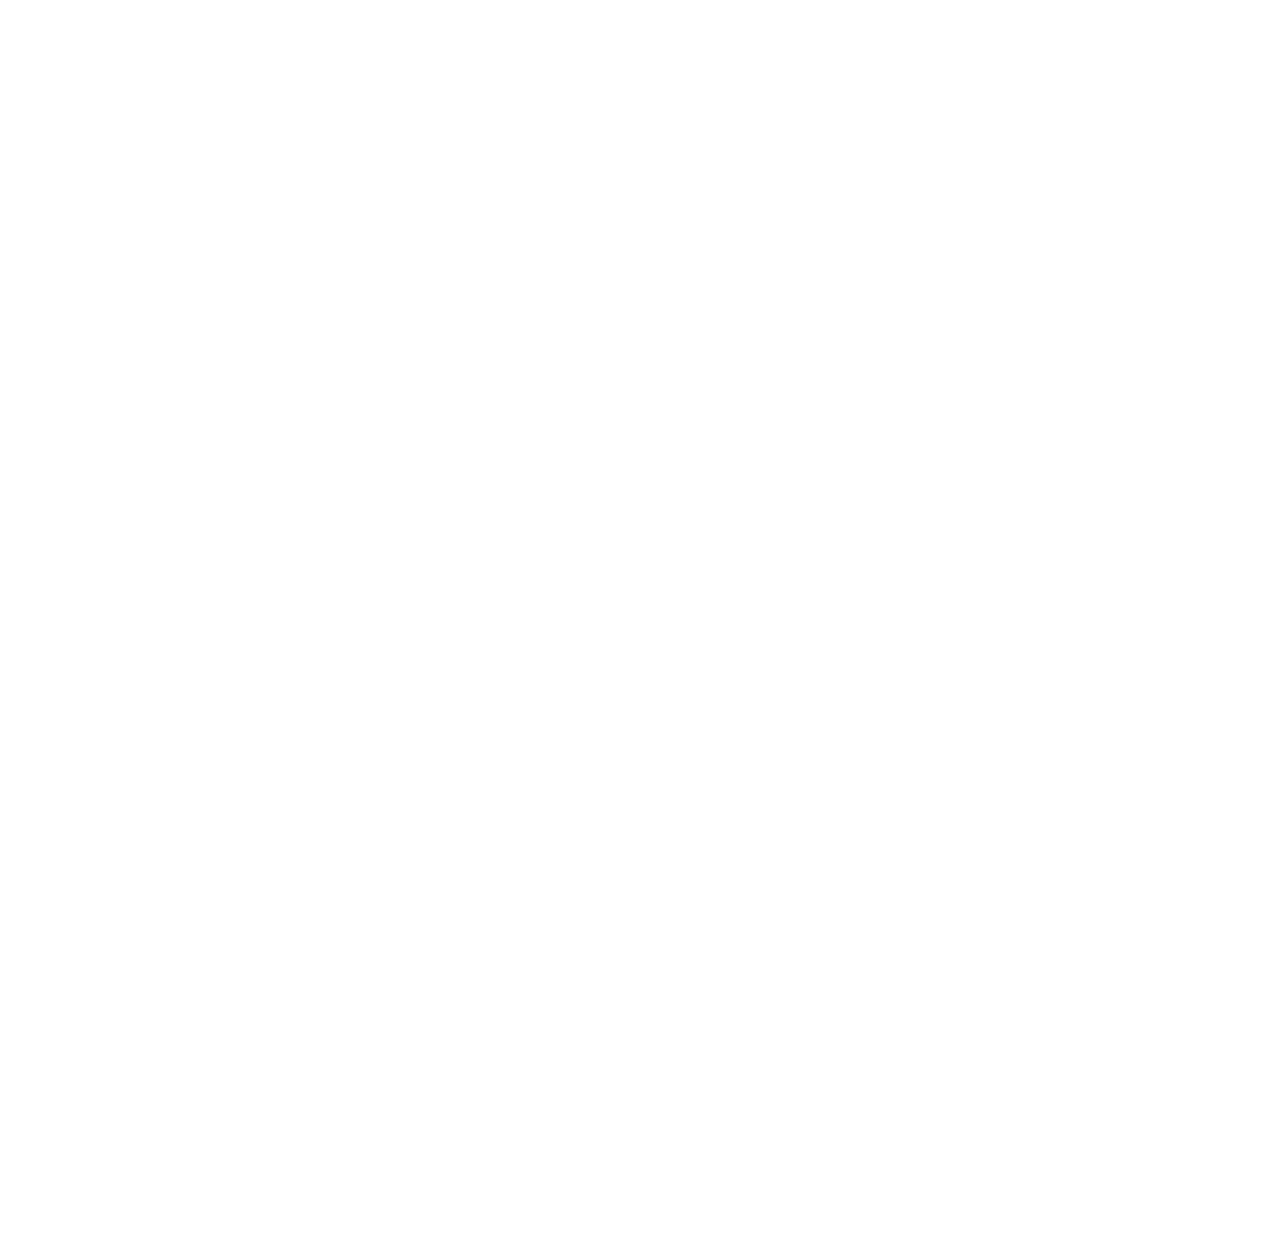 AssureHealth Group